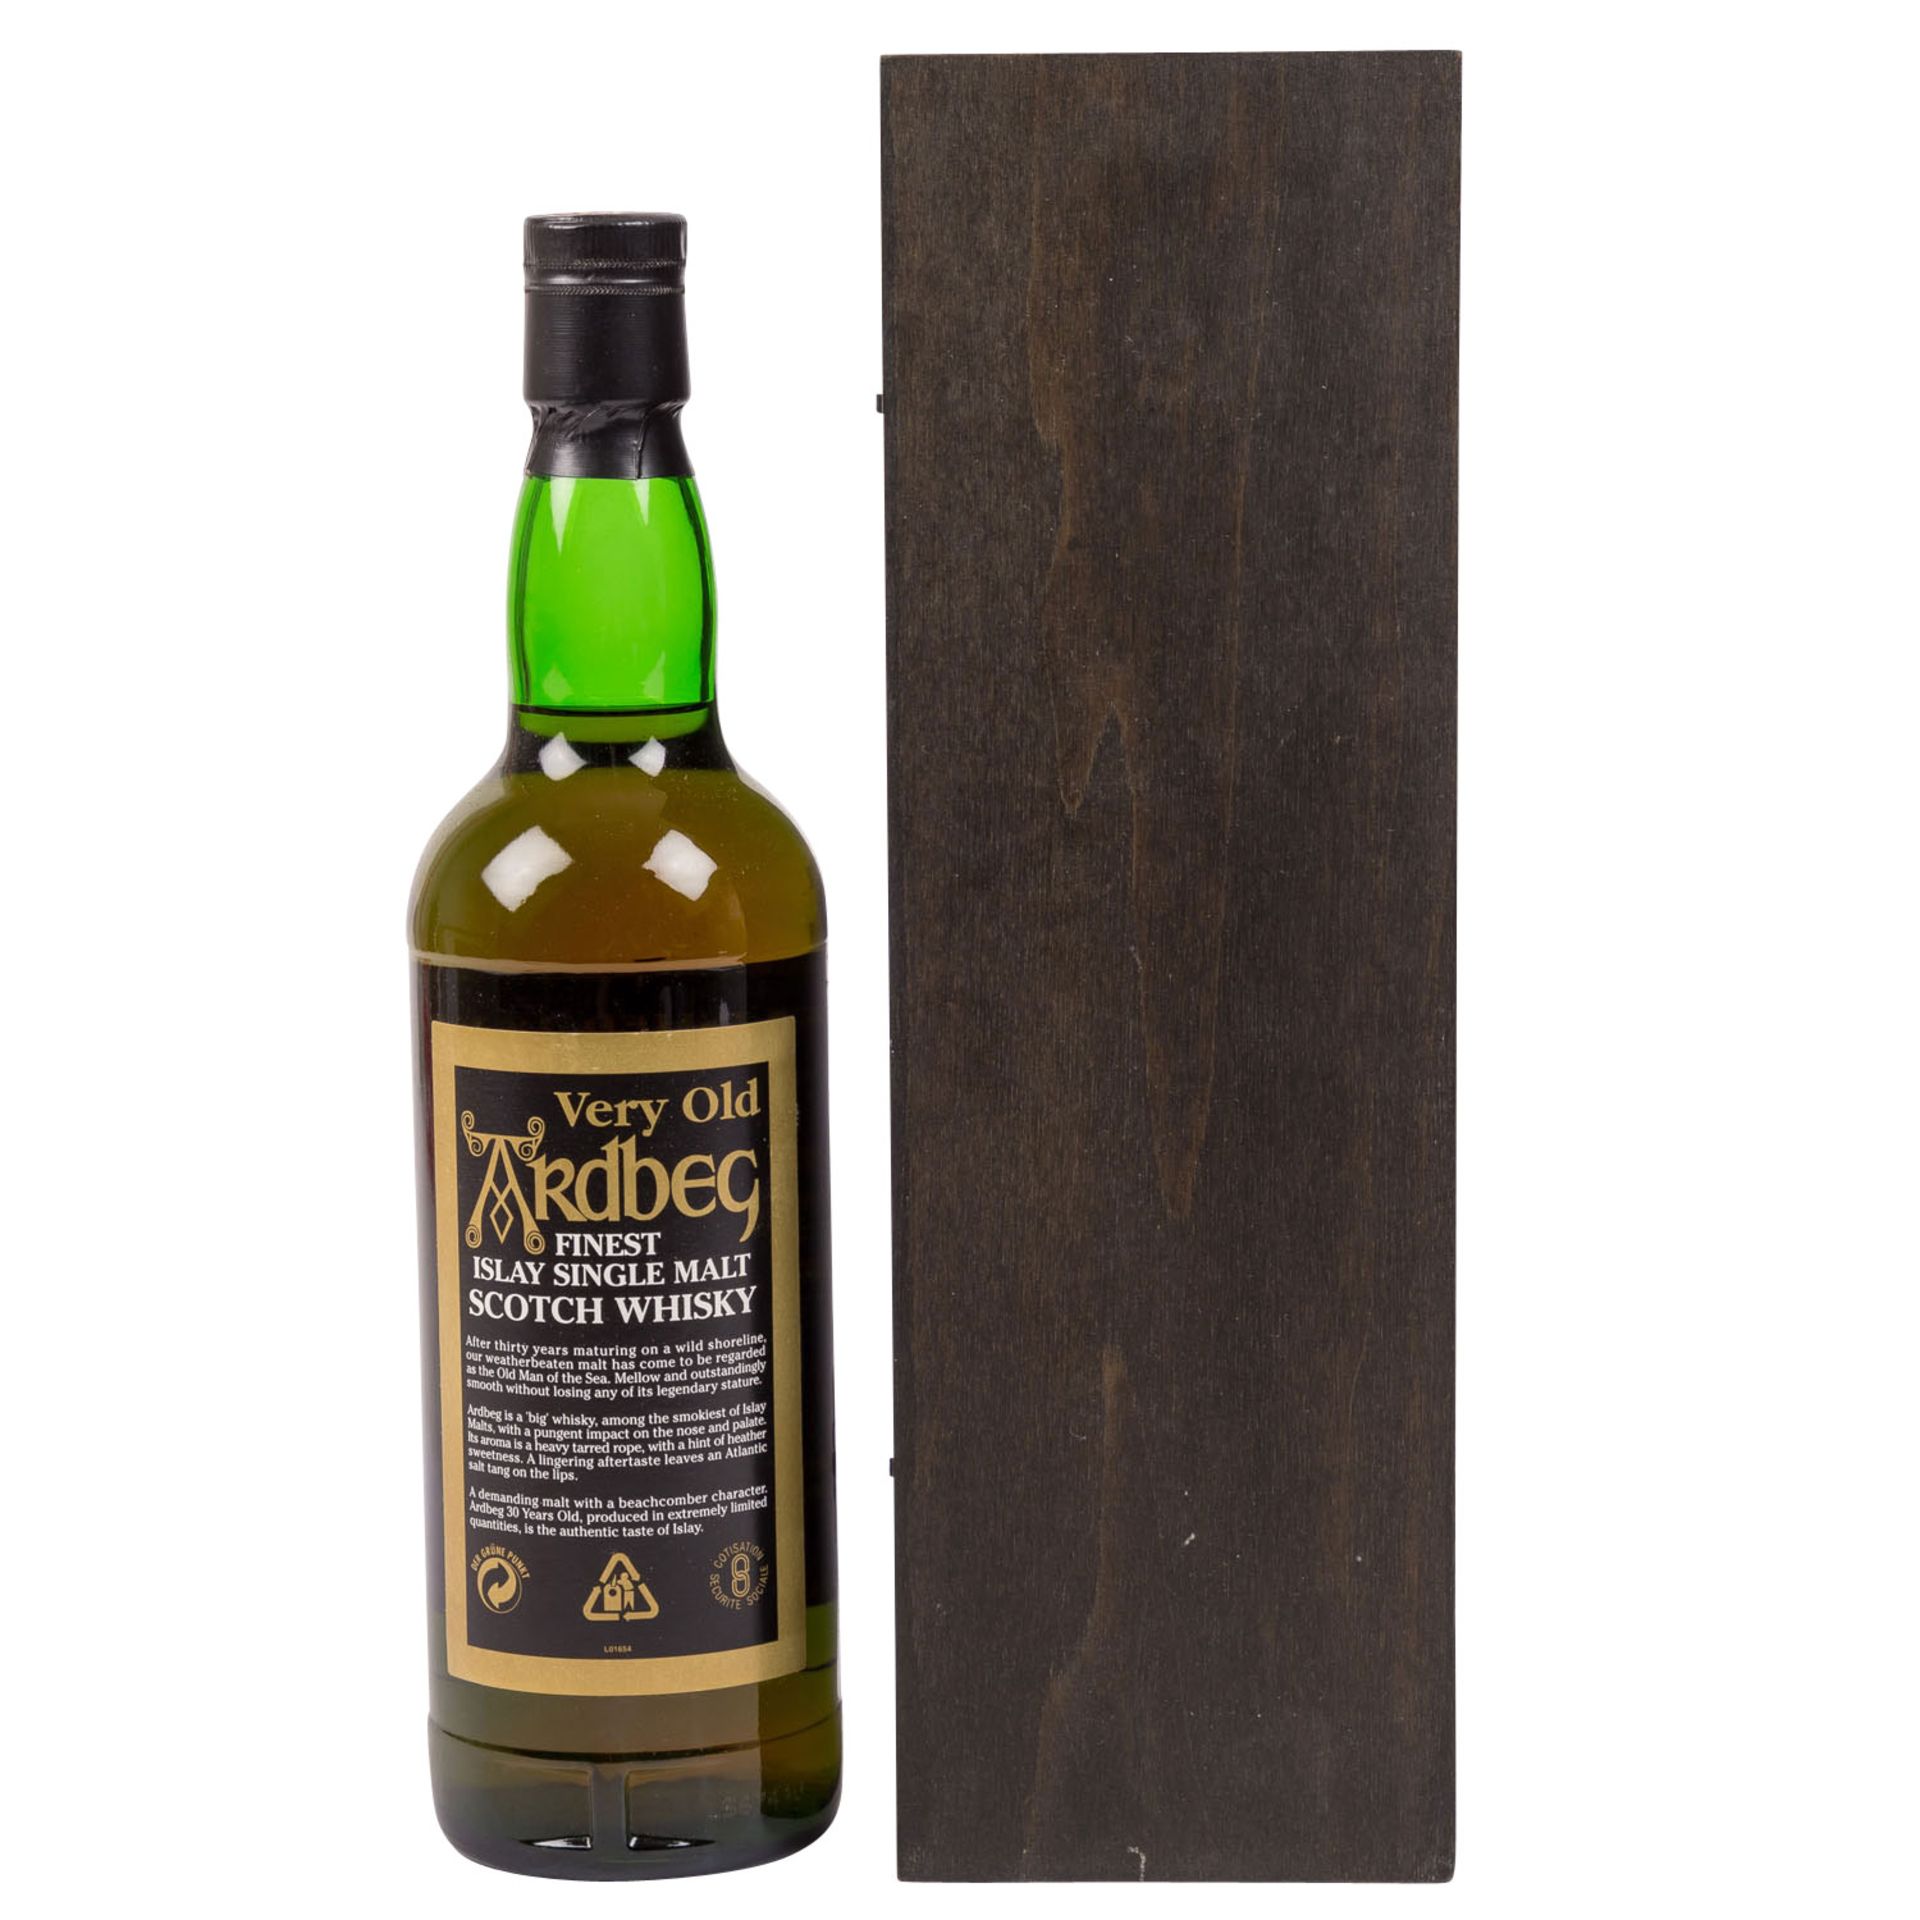 'Very old' ARDBEG Single Malt Scotch Whisky, 30 years - Image 2 of 4